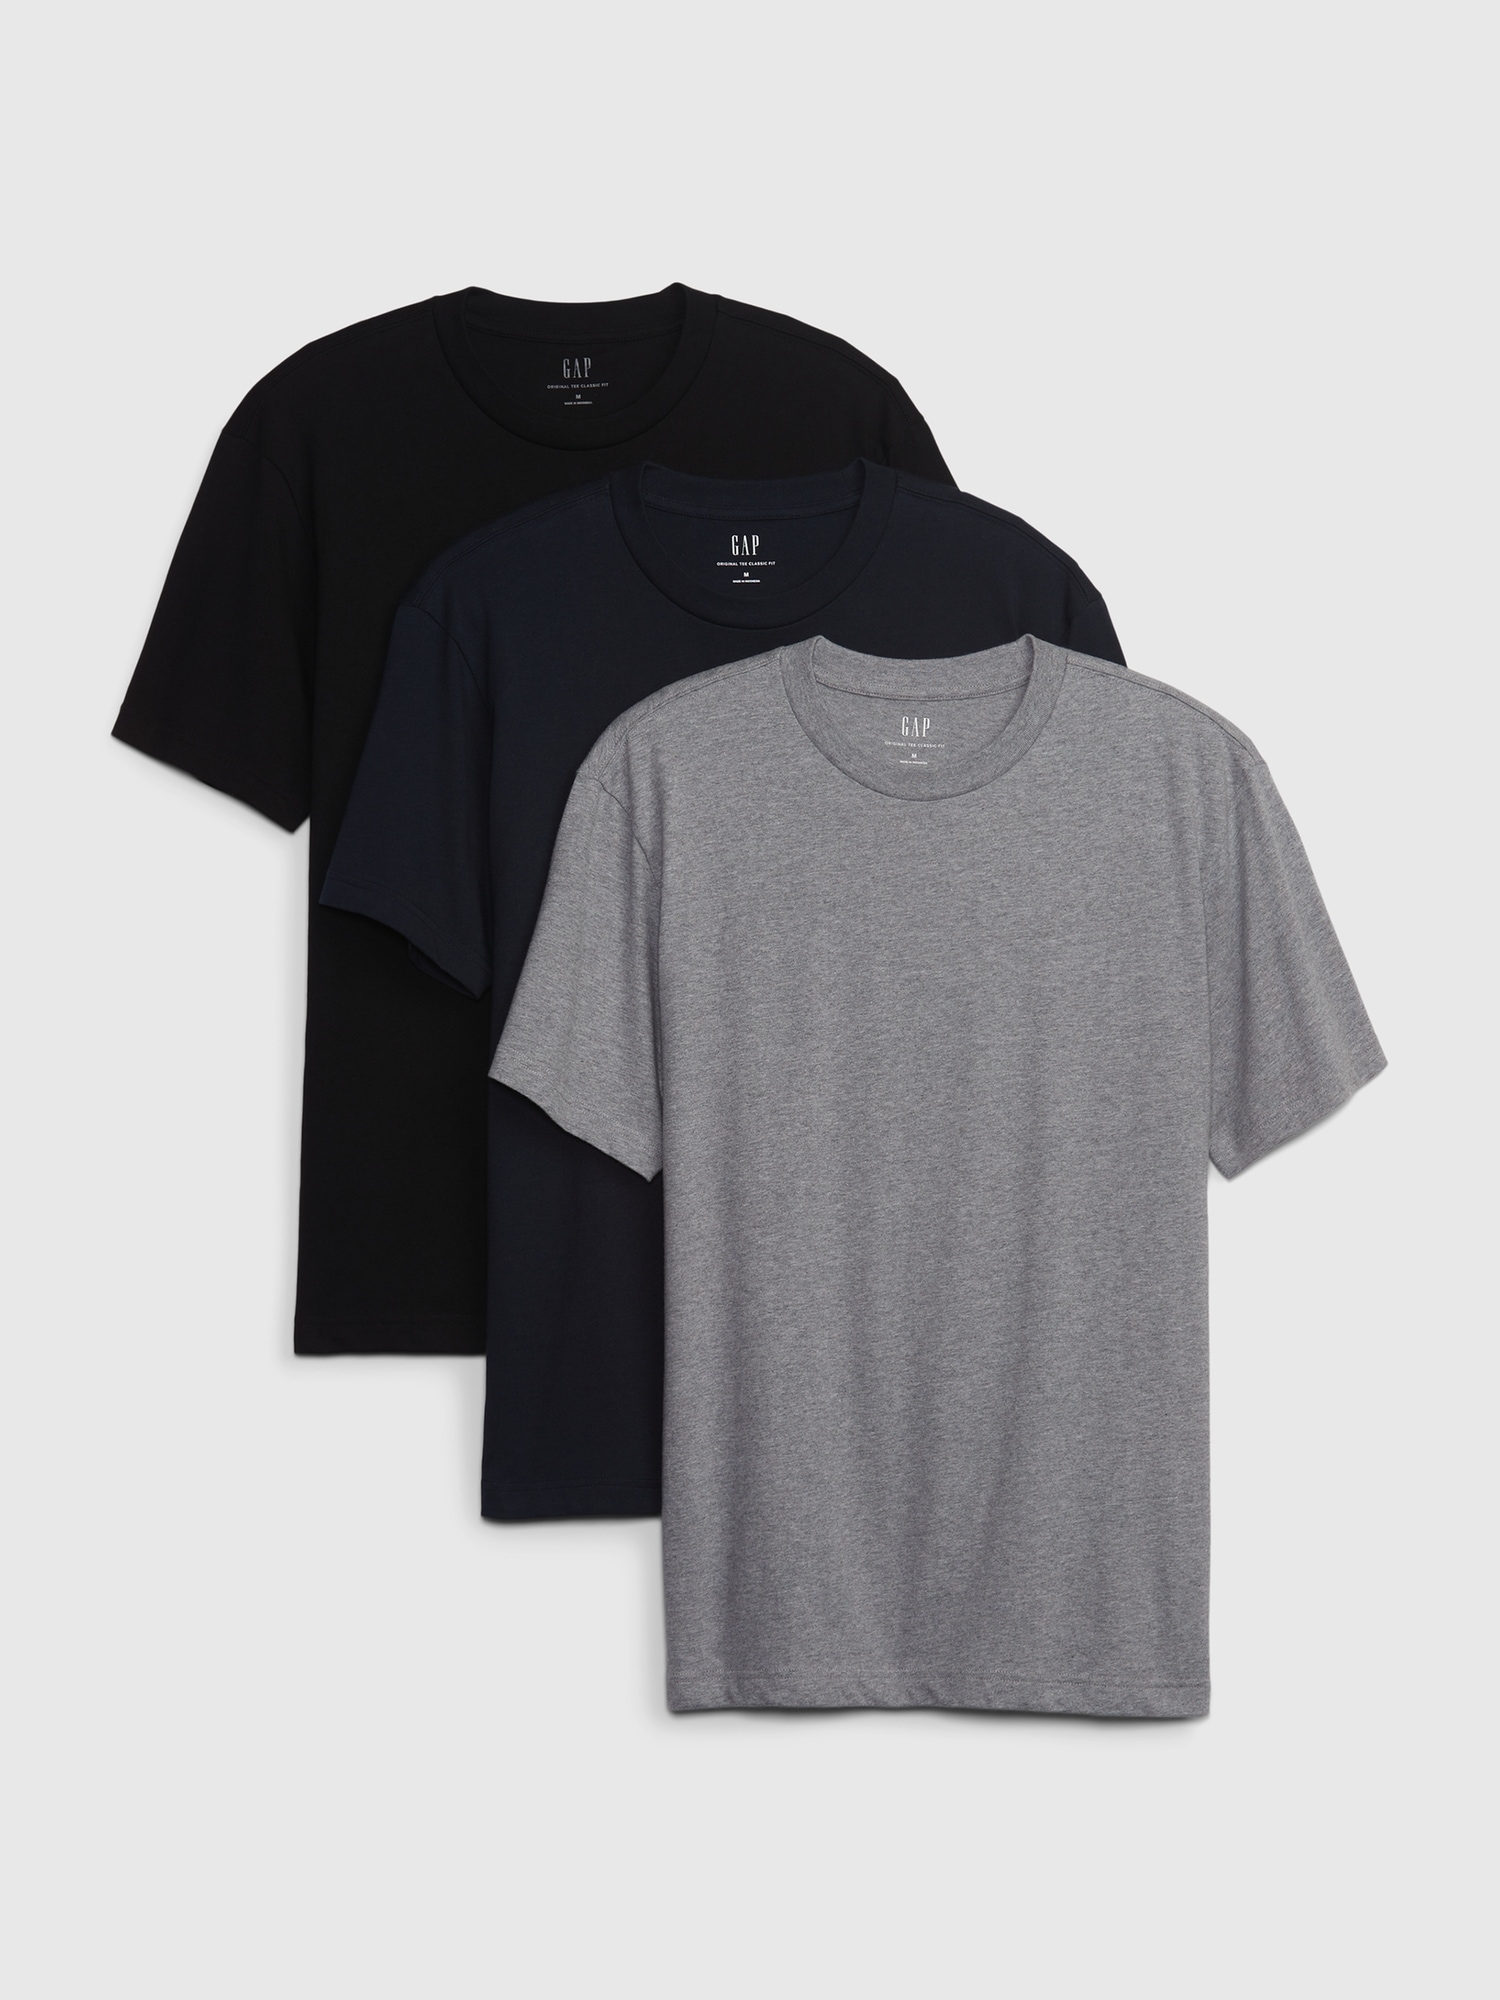 GAP Men's 2-Pack Everyday Long Sleeve Tee T-Shirt, White Navy Combo, X-Small